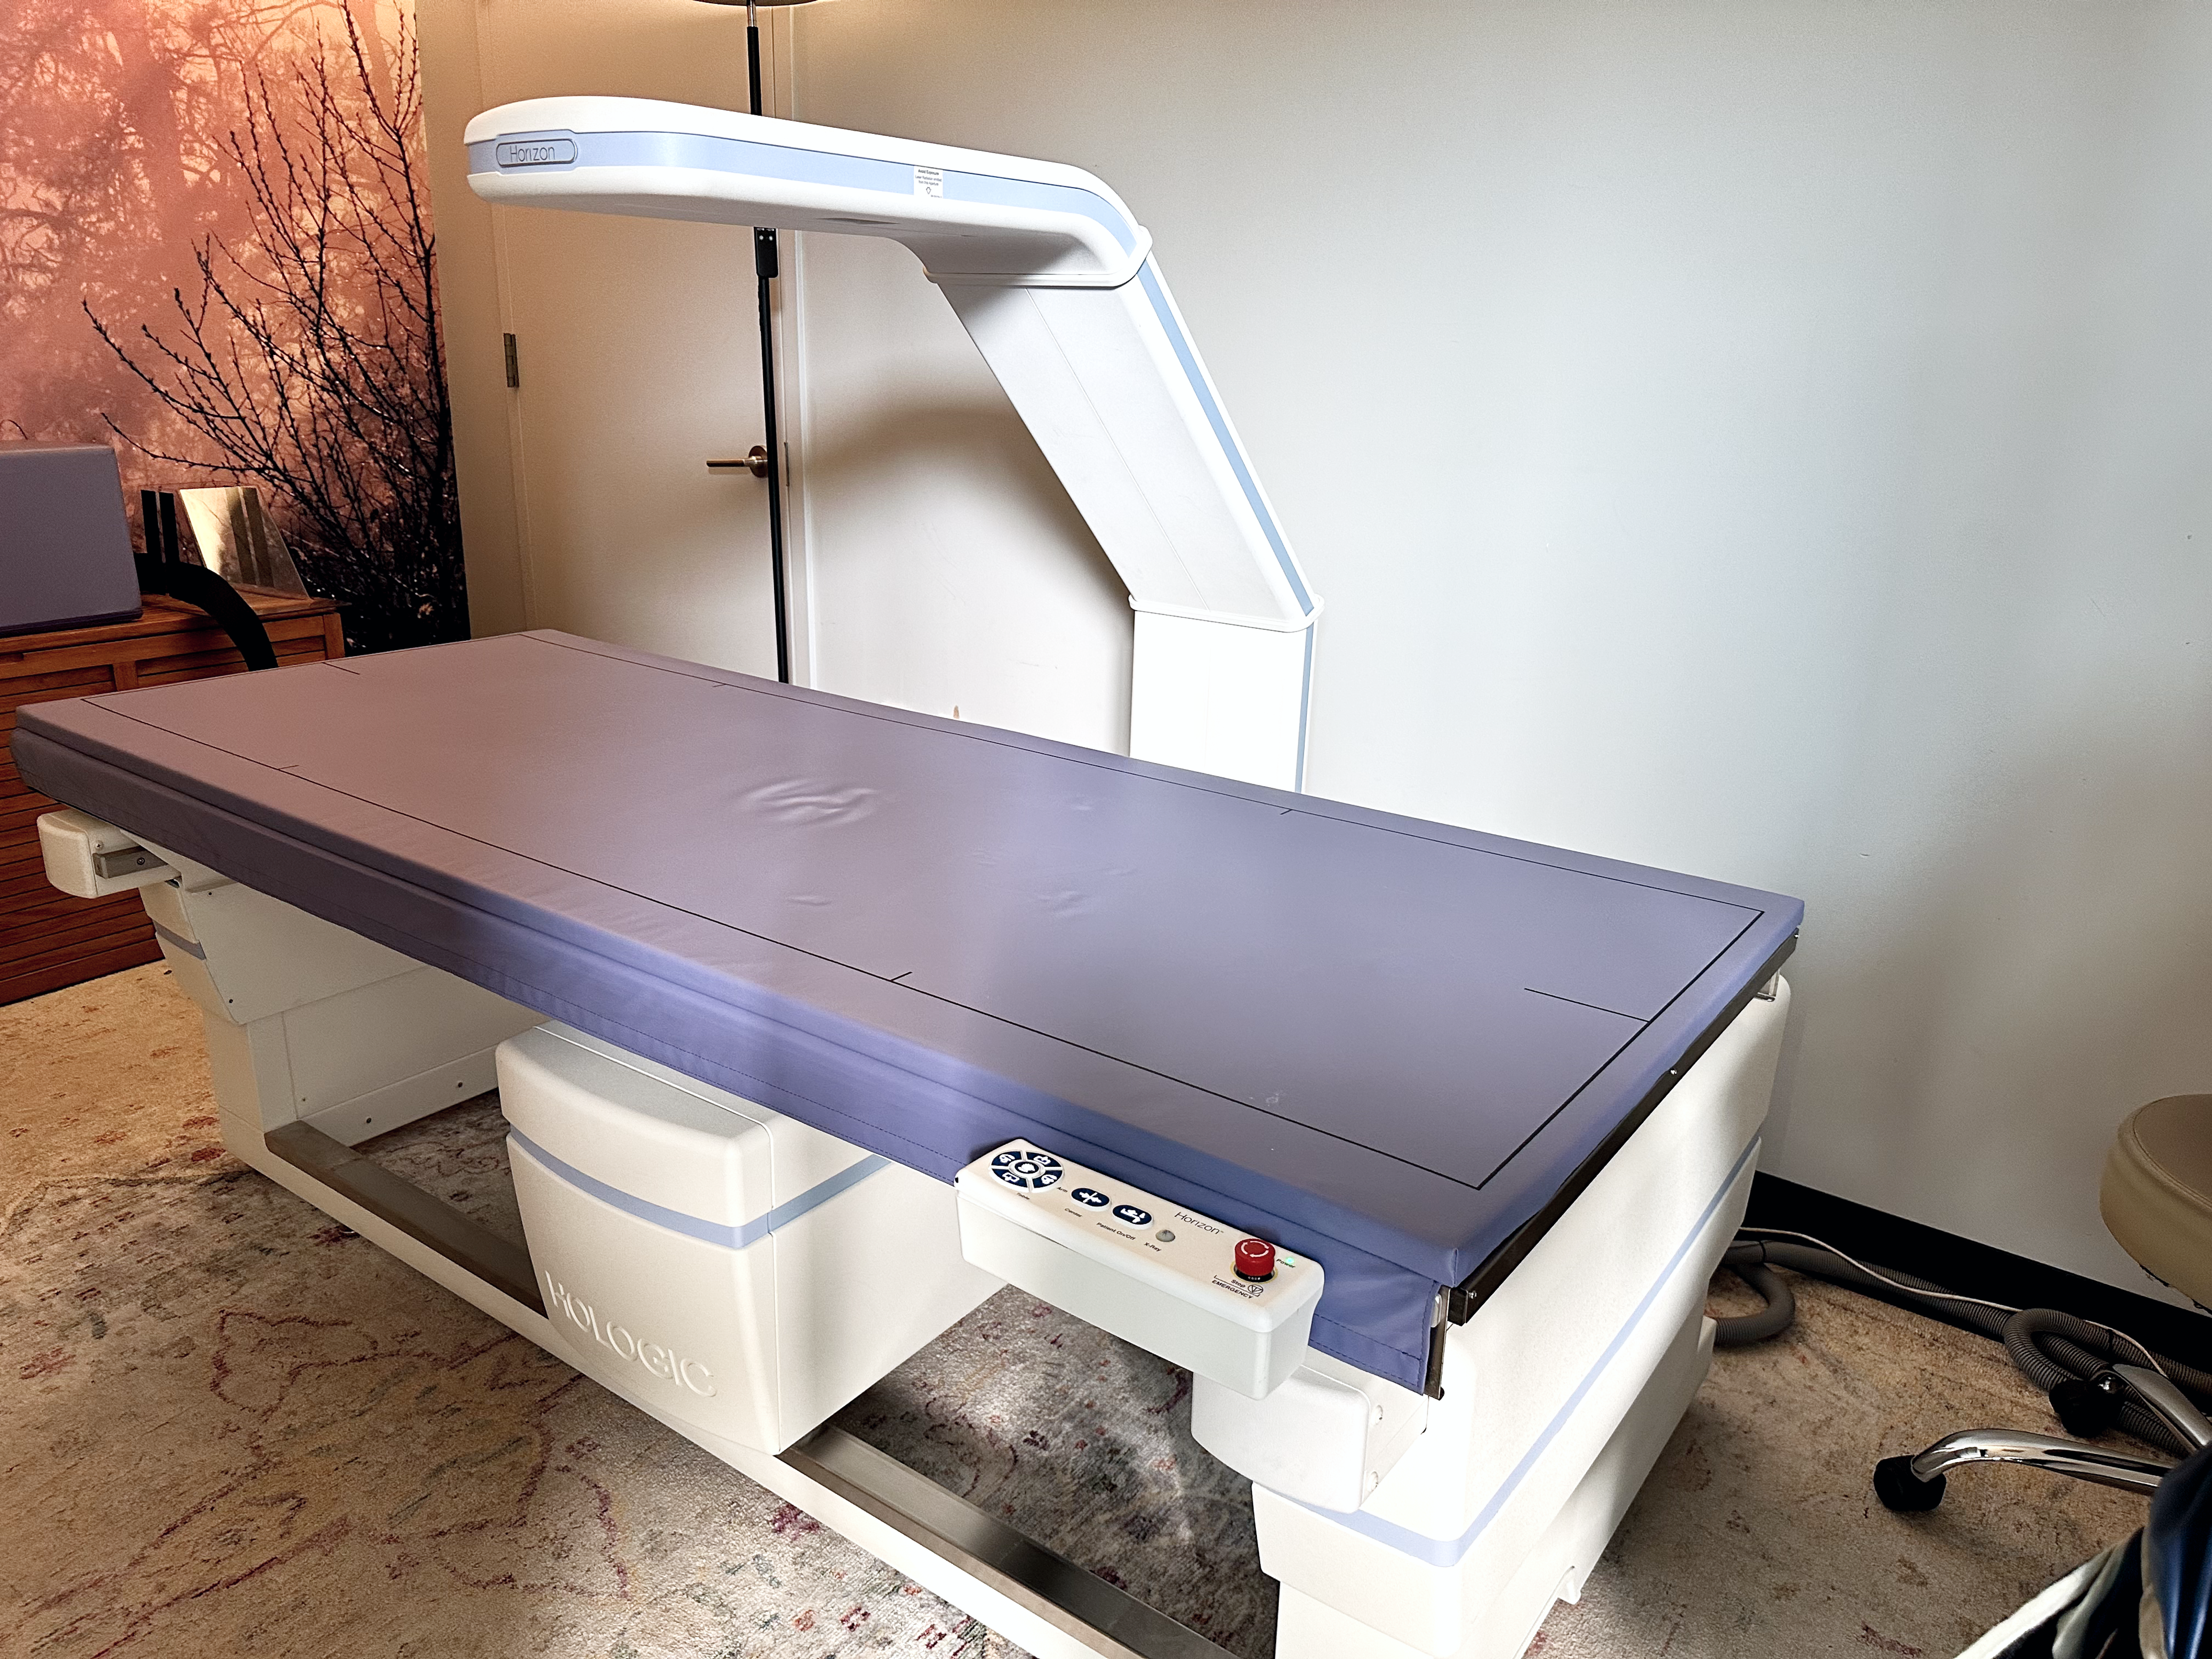 DEXA body composition scan located in Hudson Health’s longevity medicine practice in New York City. 